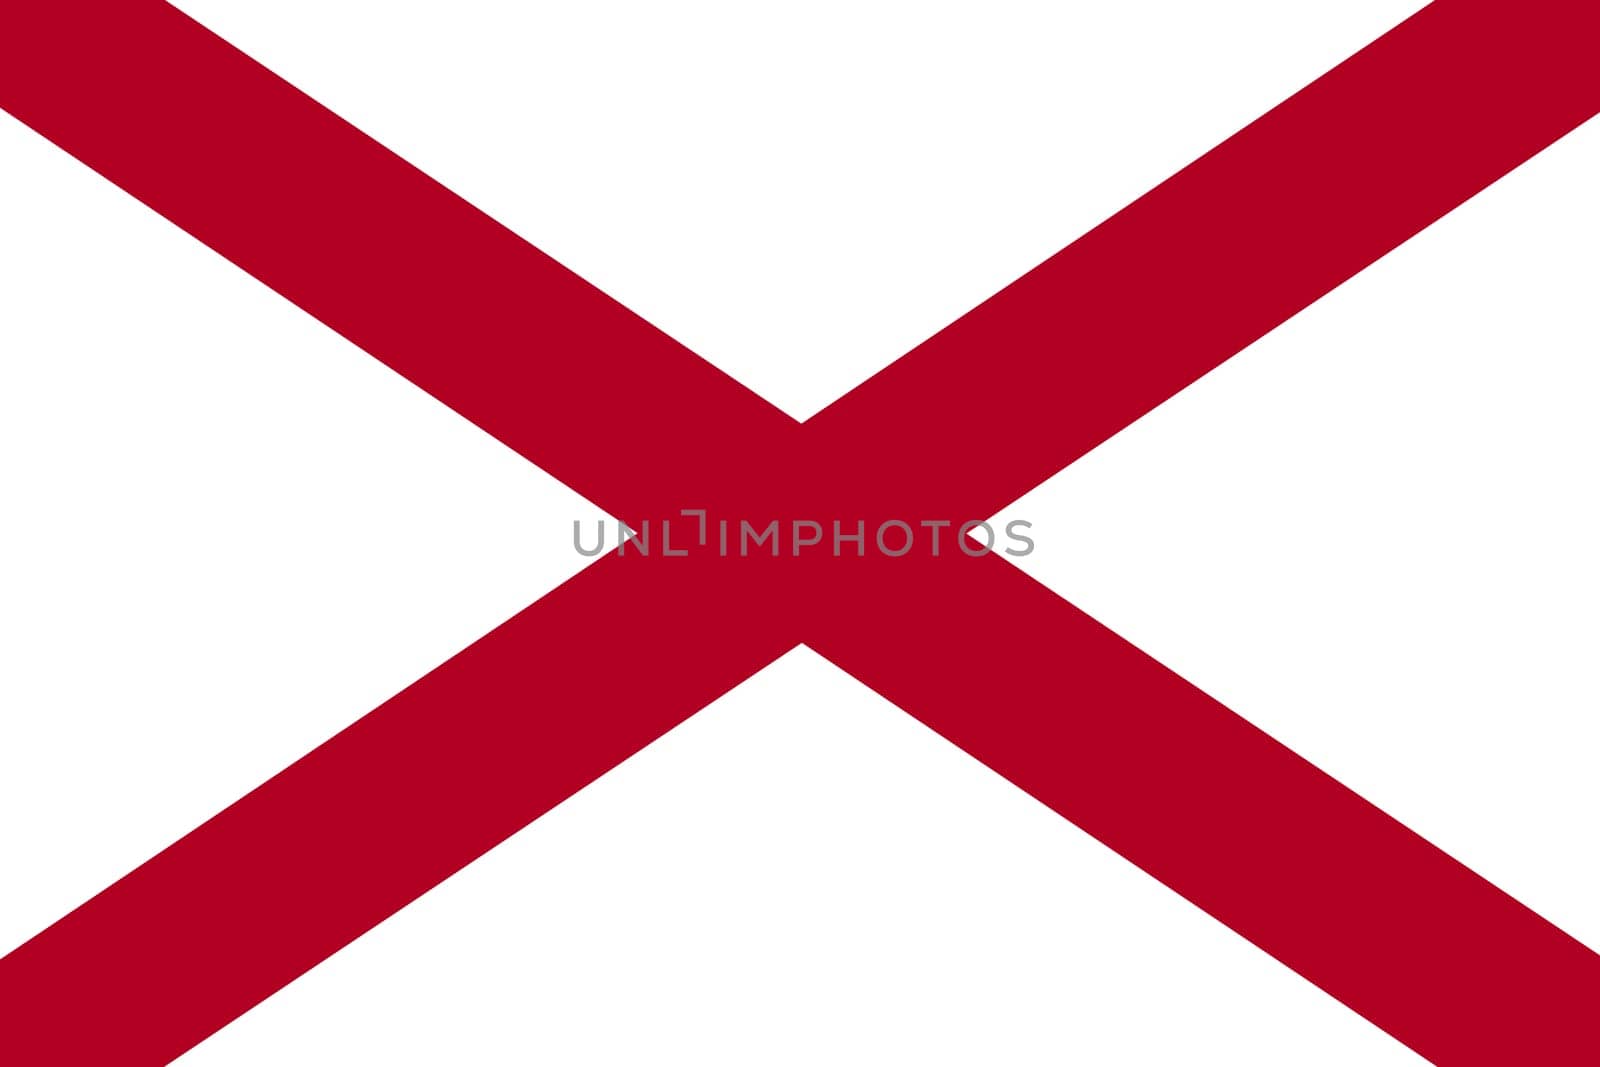 An Alabama State Flag background illustration